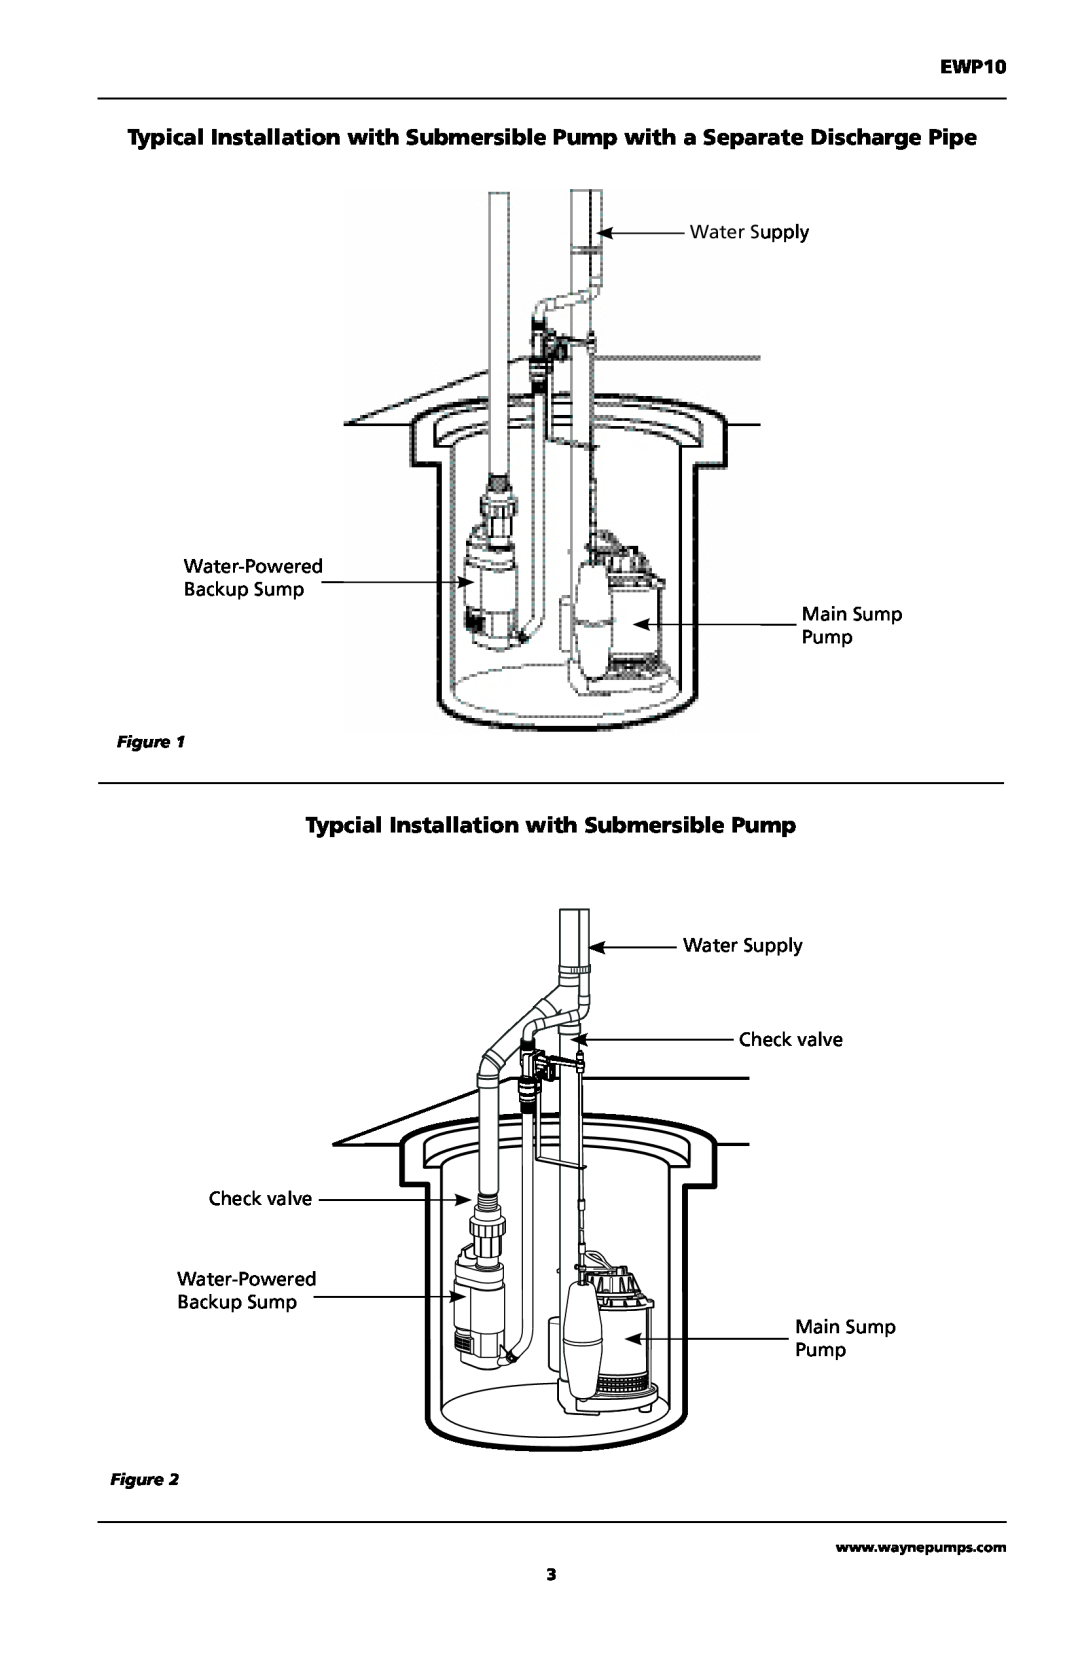 Wayne EWP10 Typcial Installation with Submersible Pump, Water Supply Water-Powered Backup Sump Main Sump 